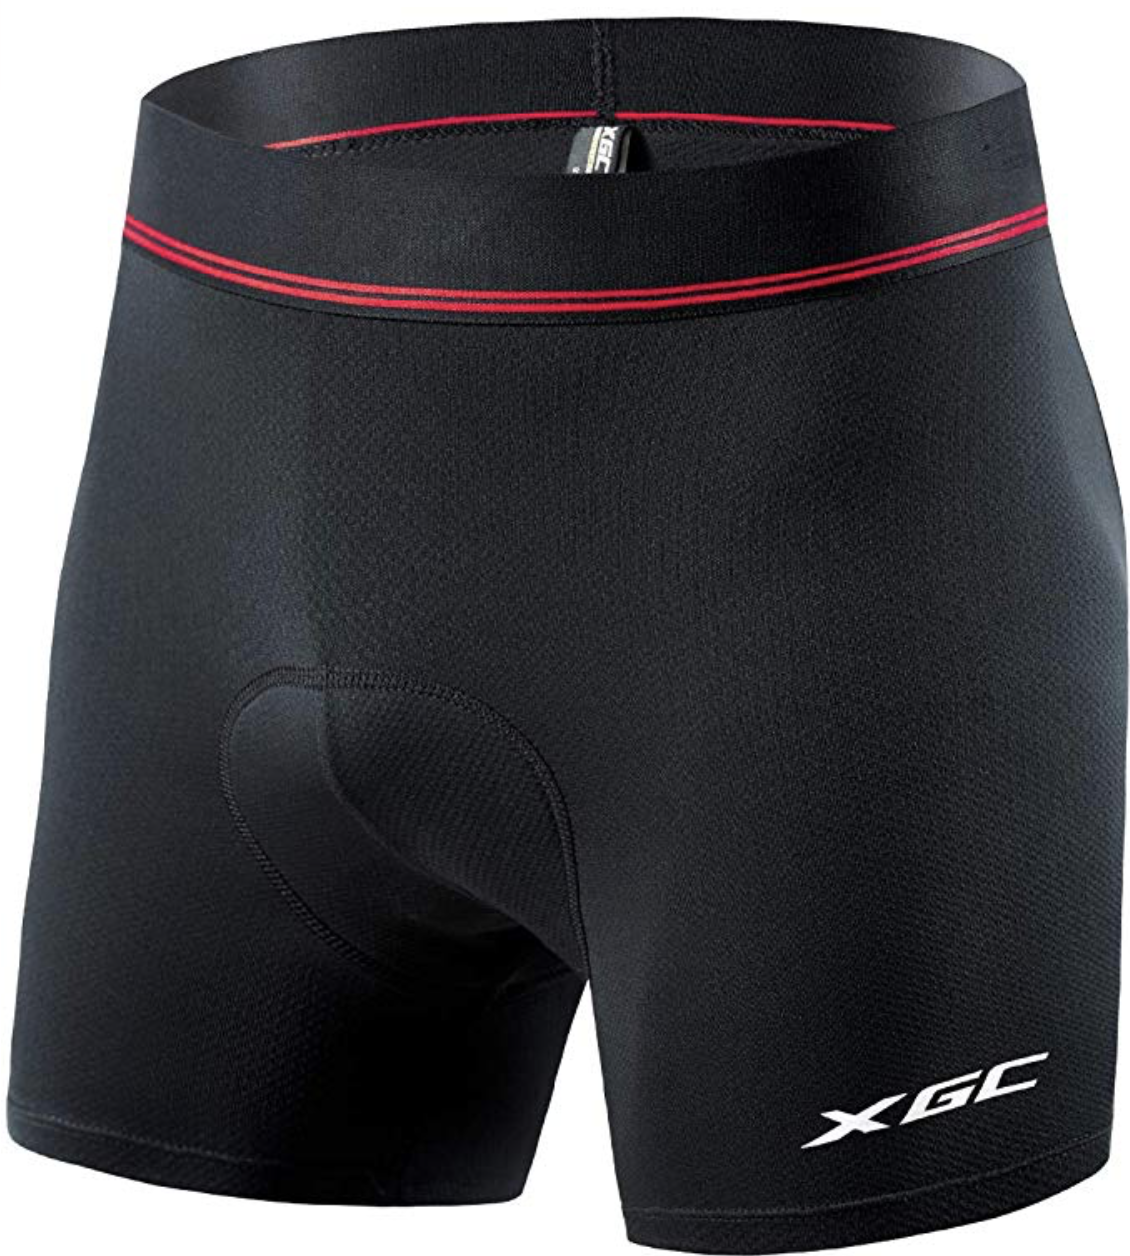 XGC Men's Cycling Underwear